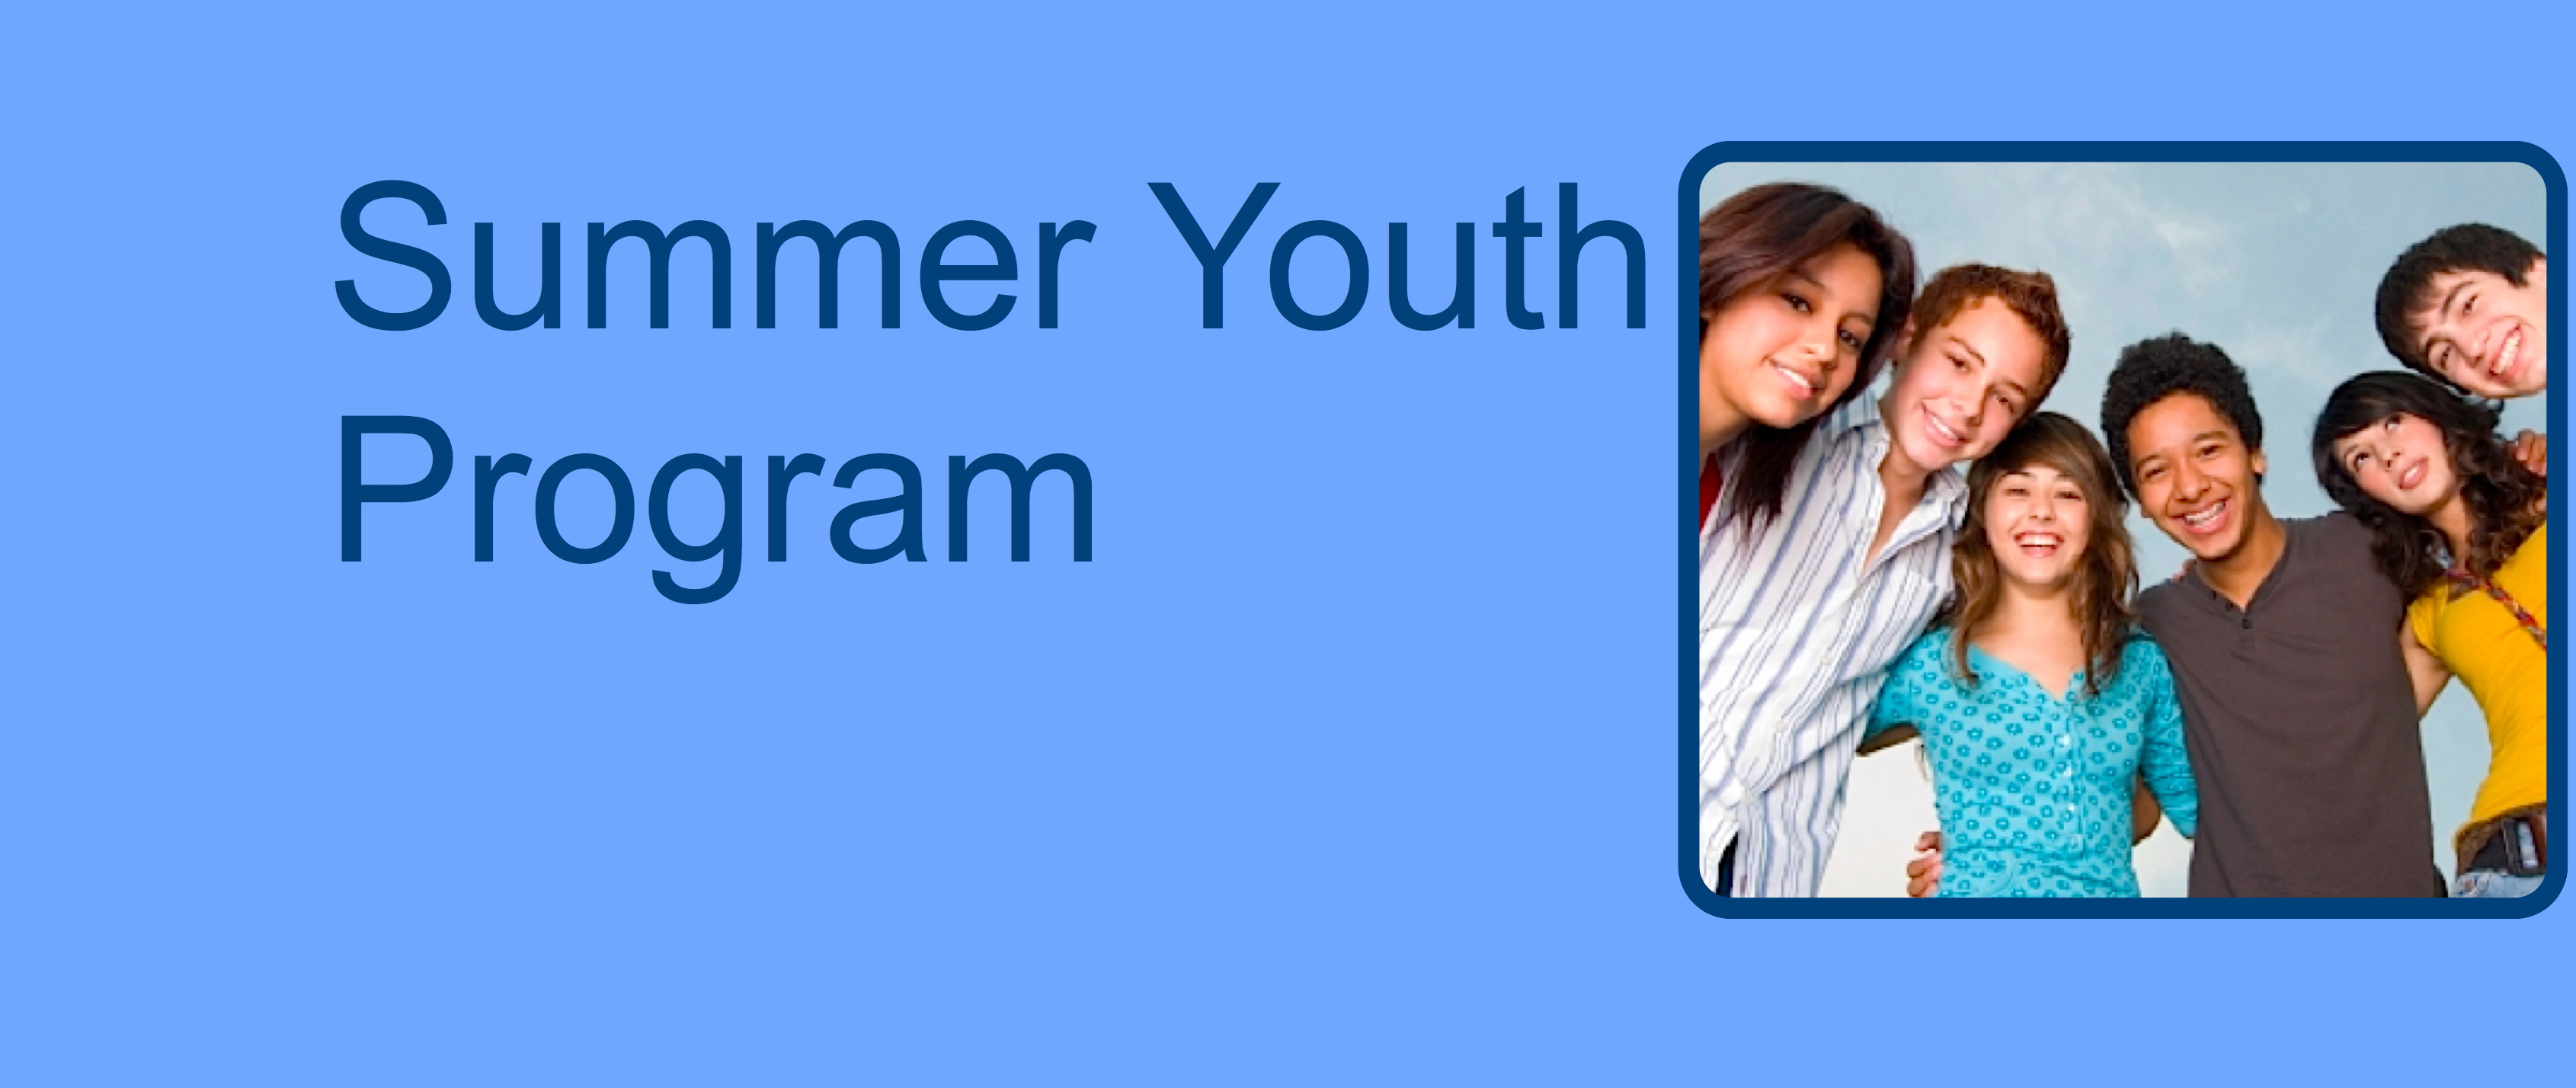 Summer Youth Program Bemidji Middle School